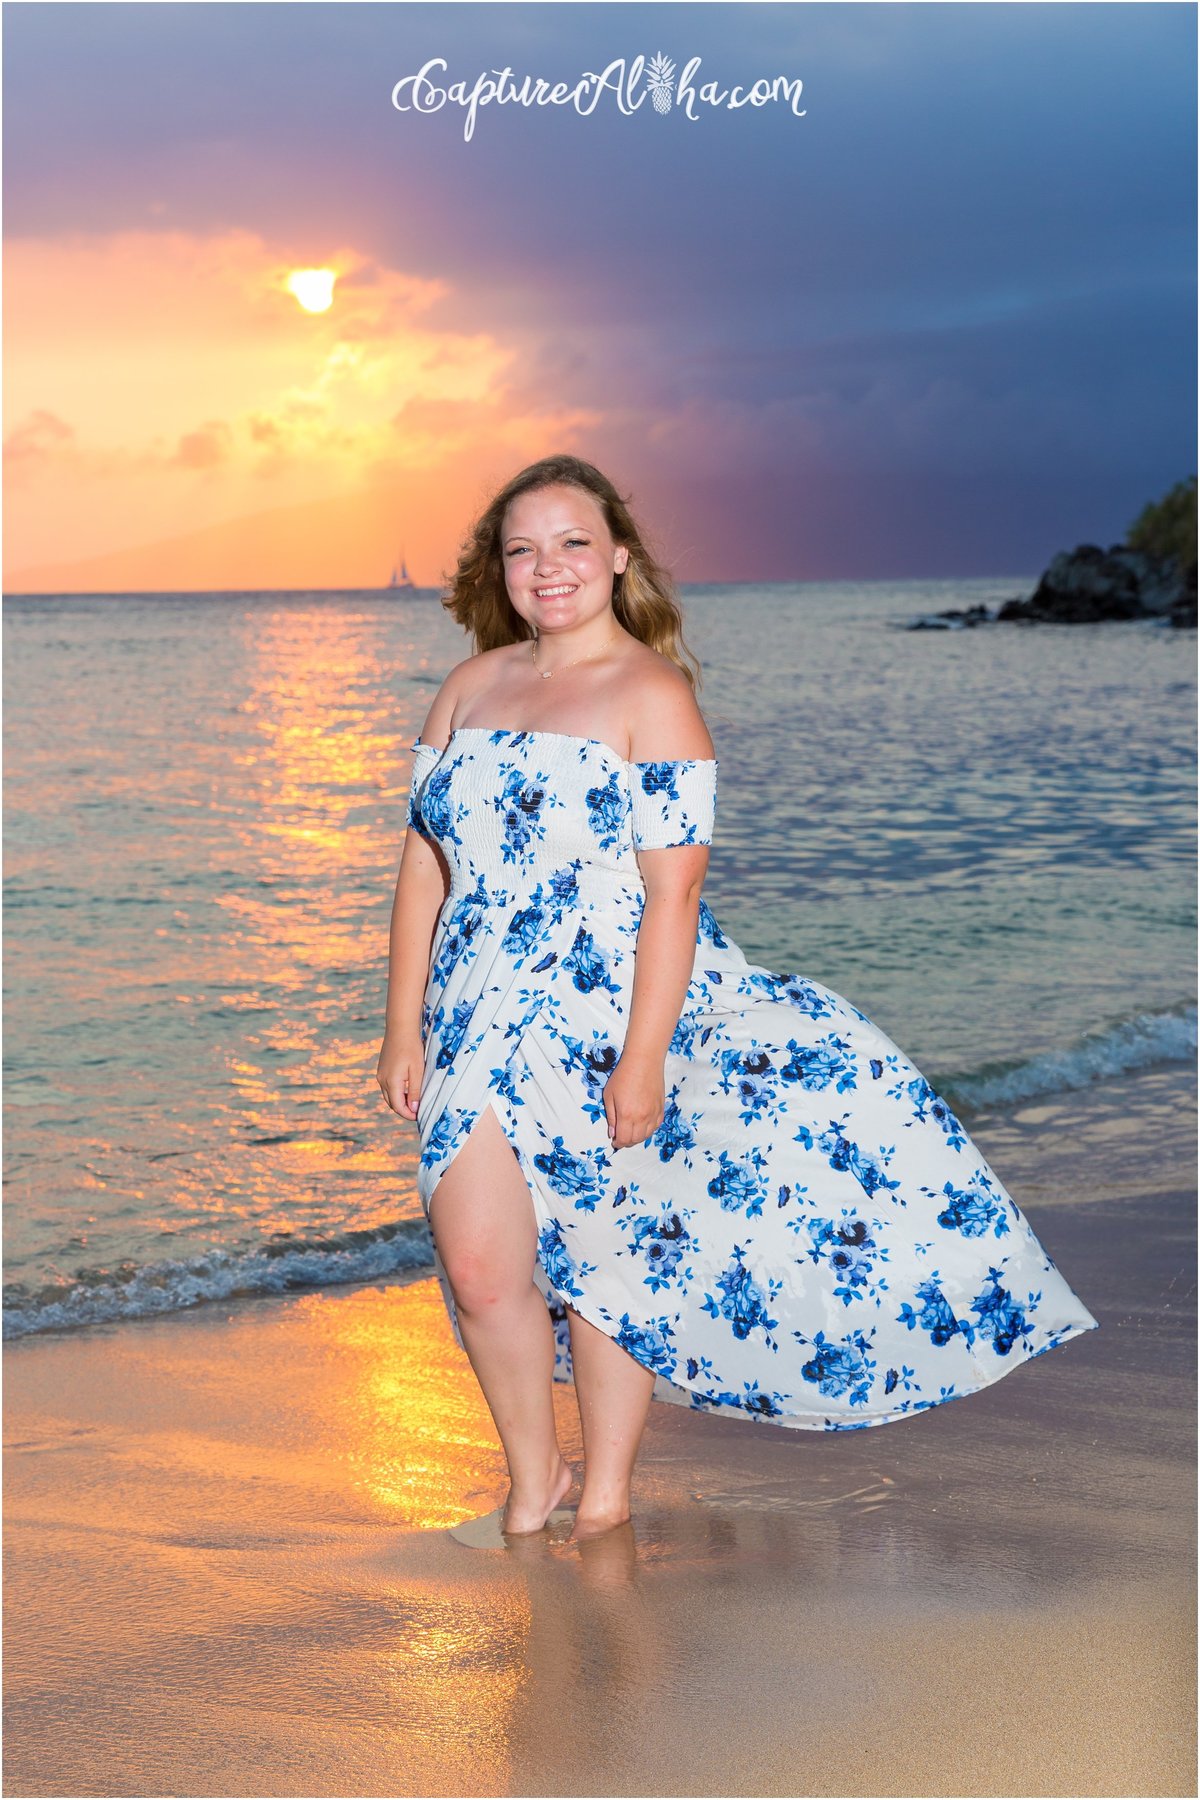 Capture Aloha Photography, Maui Senior Portrait Photography with Beautiful Sunset on the beach